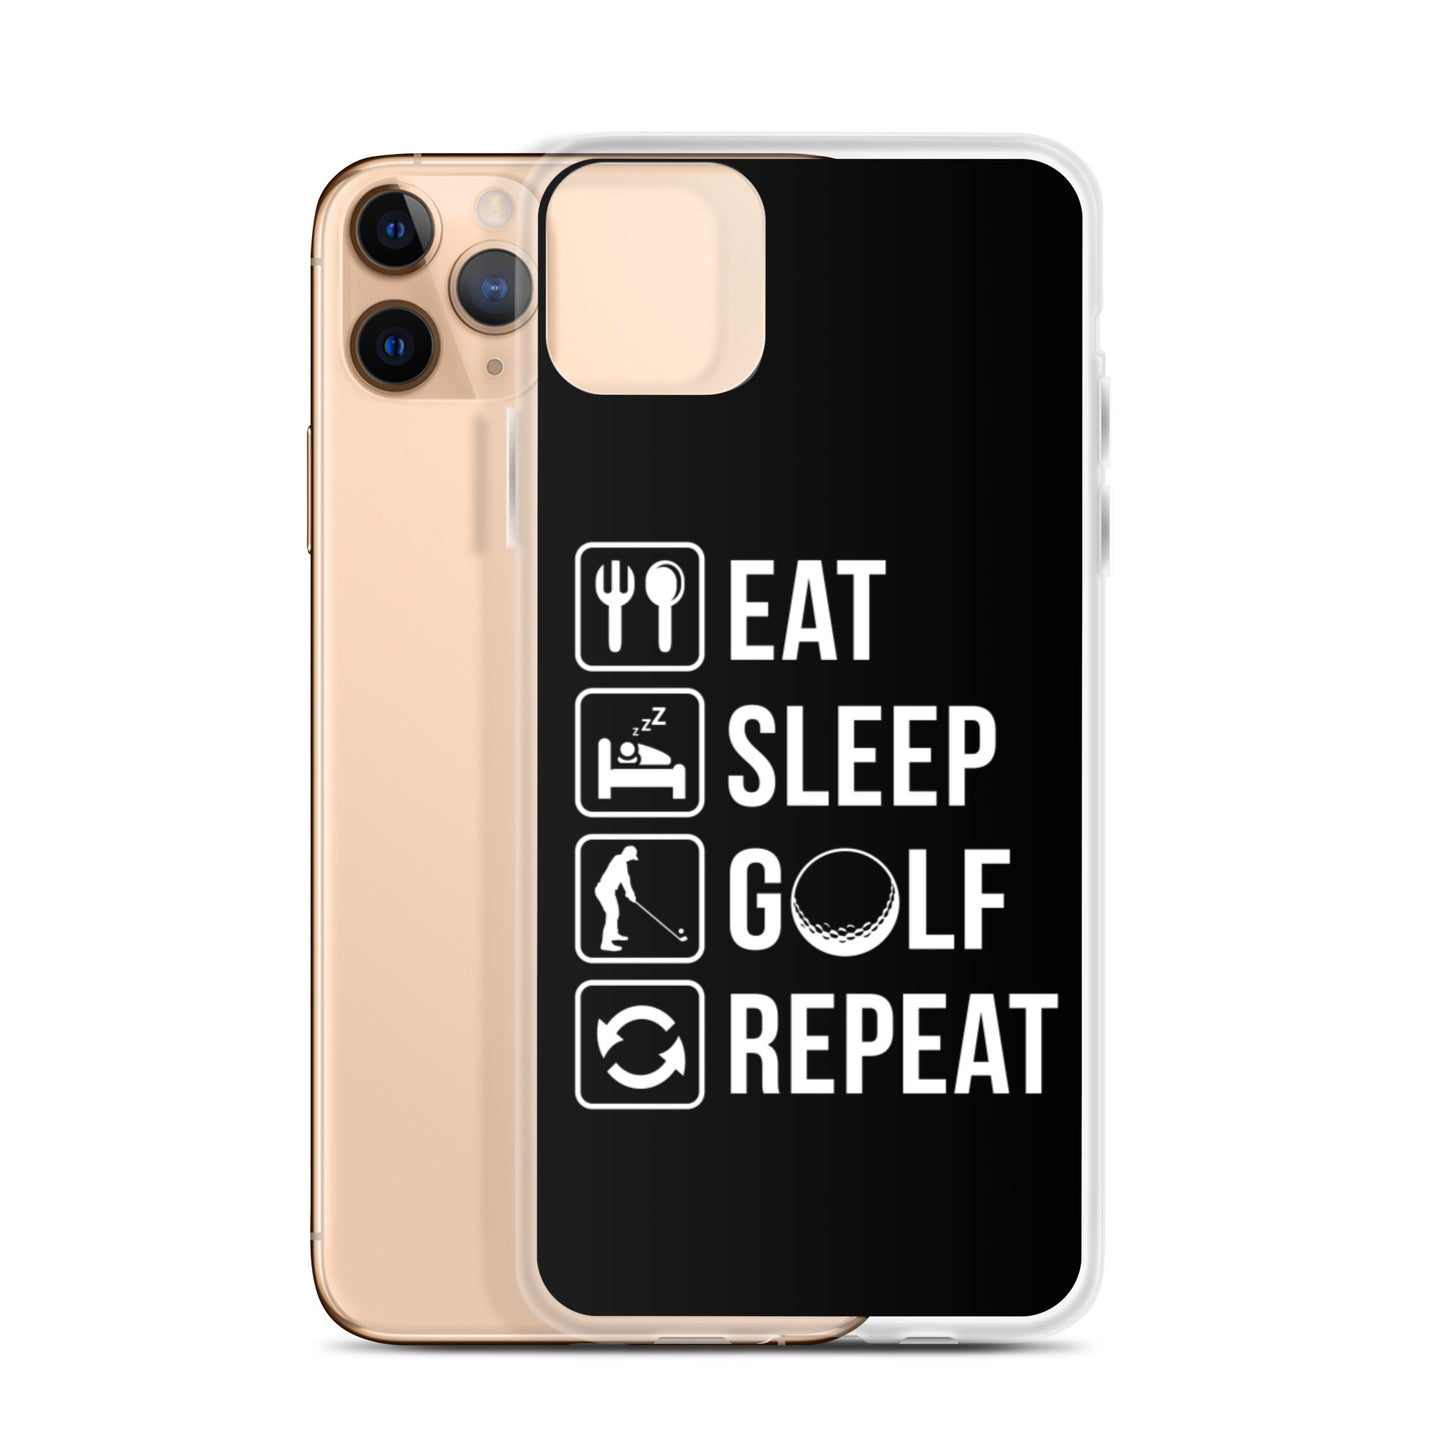 Eat, Sleep, Golf, Repeat iPhone Case